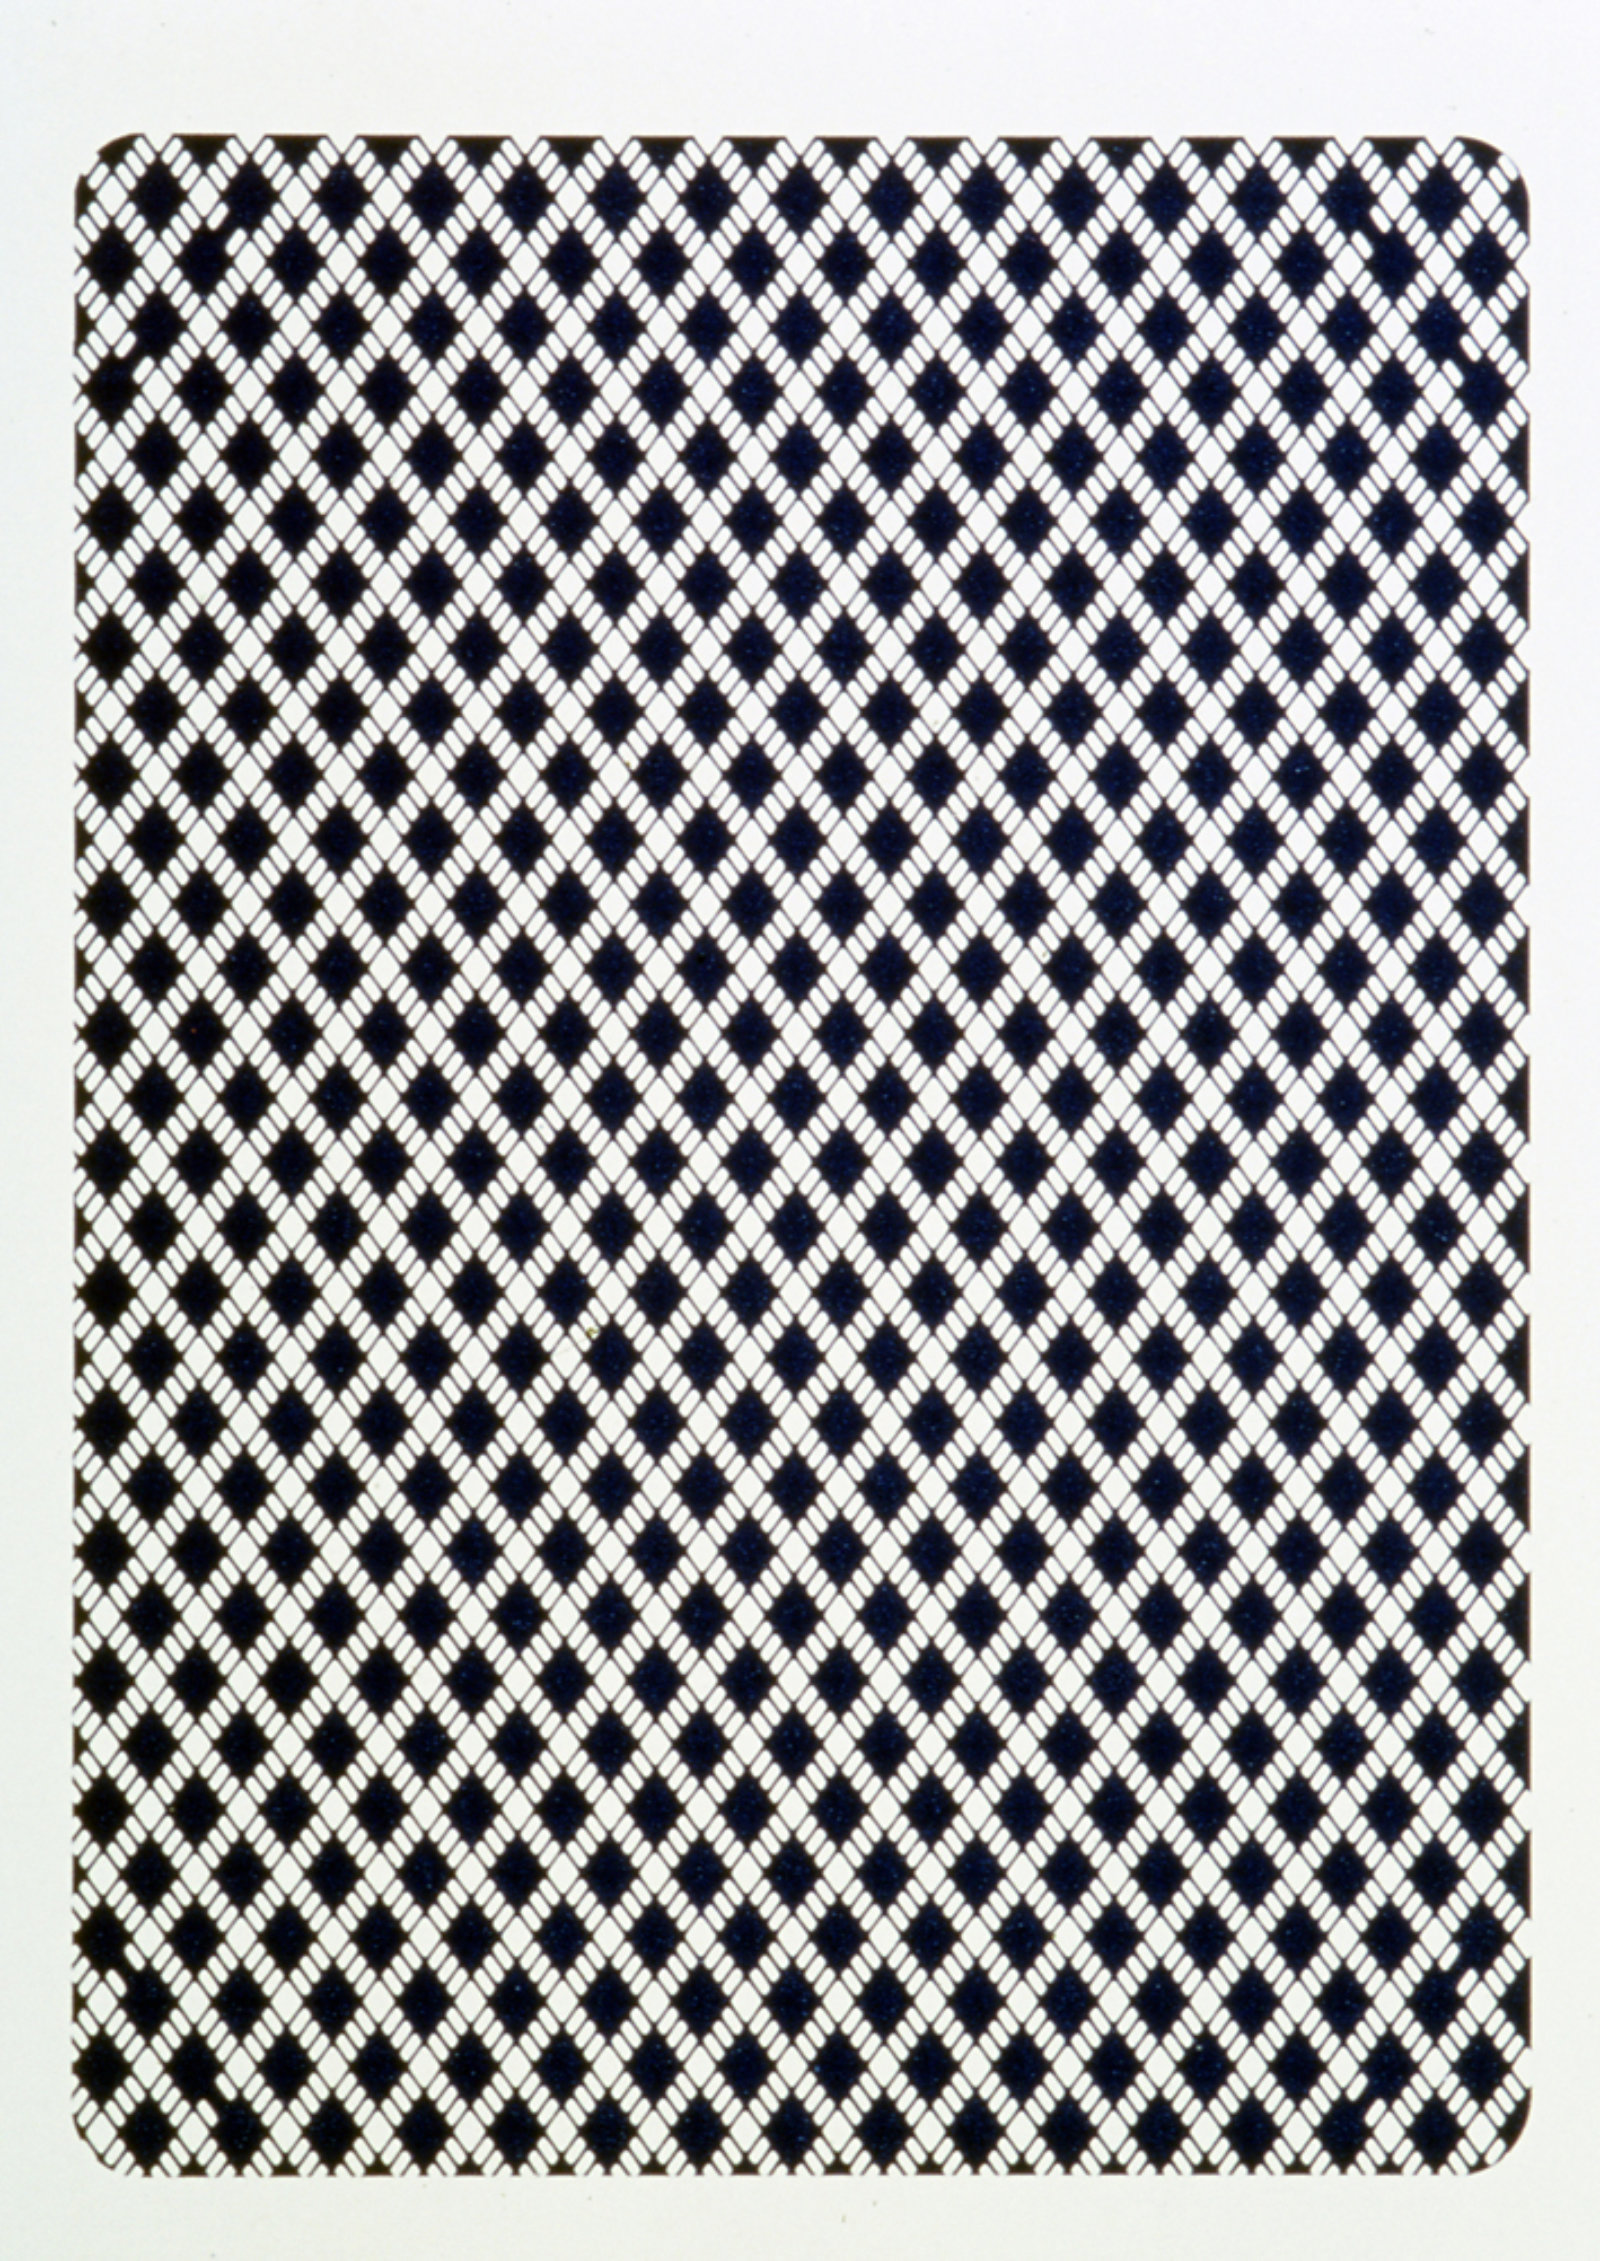 Janice Kerbel, Three Marked Decks (detail), 1999, offset lithographs, 32 x 40 in. (80 x 100 cm)